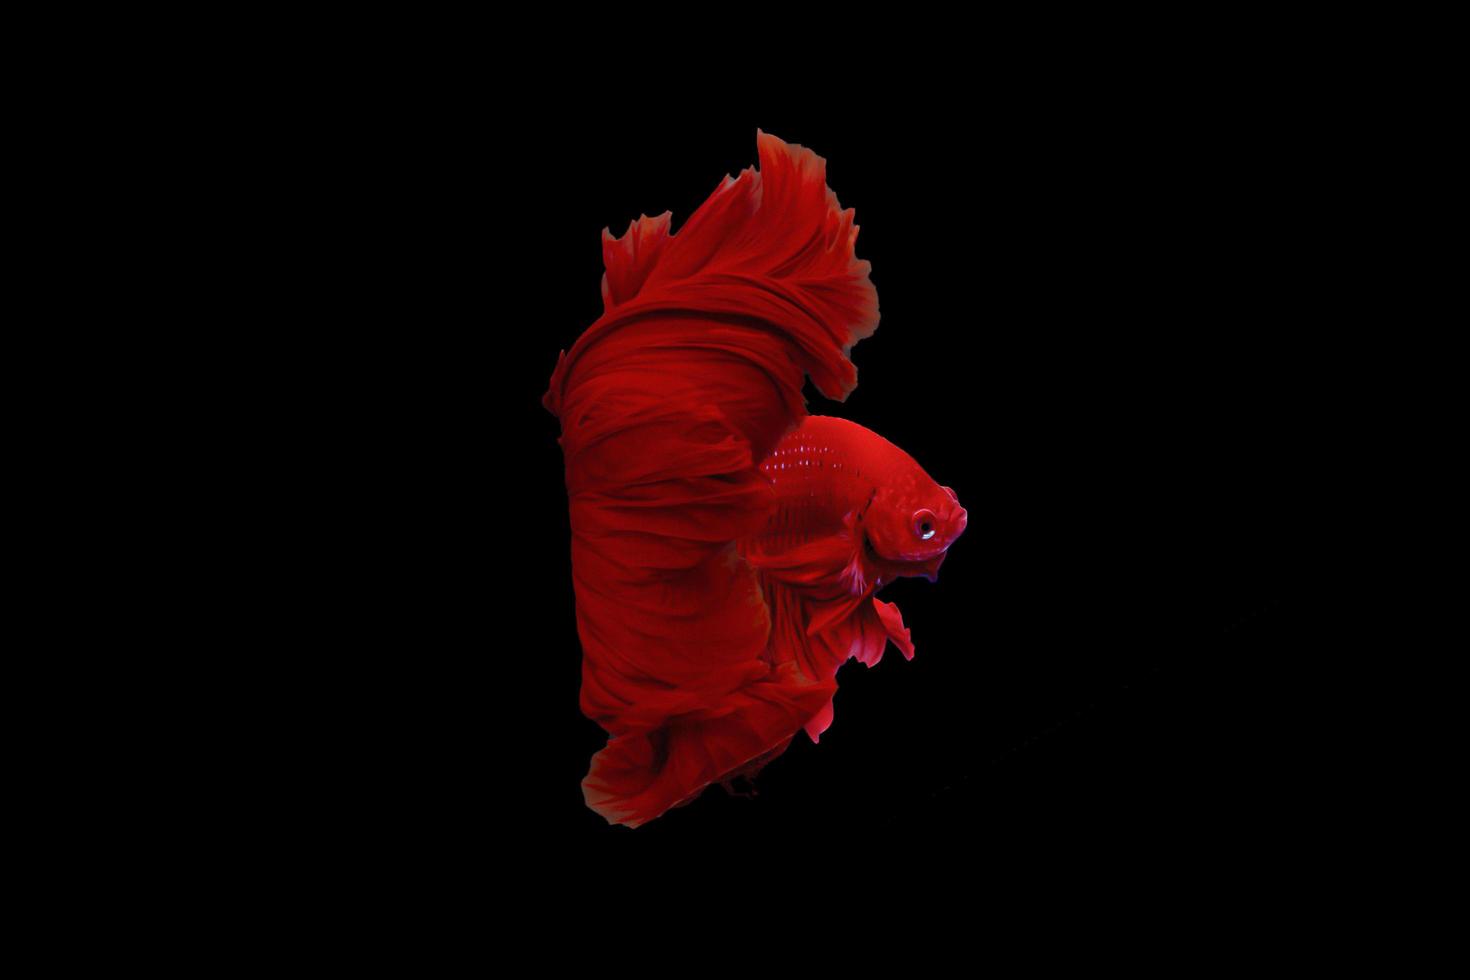 hermoso pez betta de cola de media luna súper roja o pez luchador momento en movimiento aislado en fondo negro foto